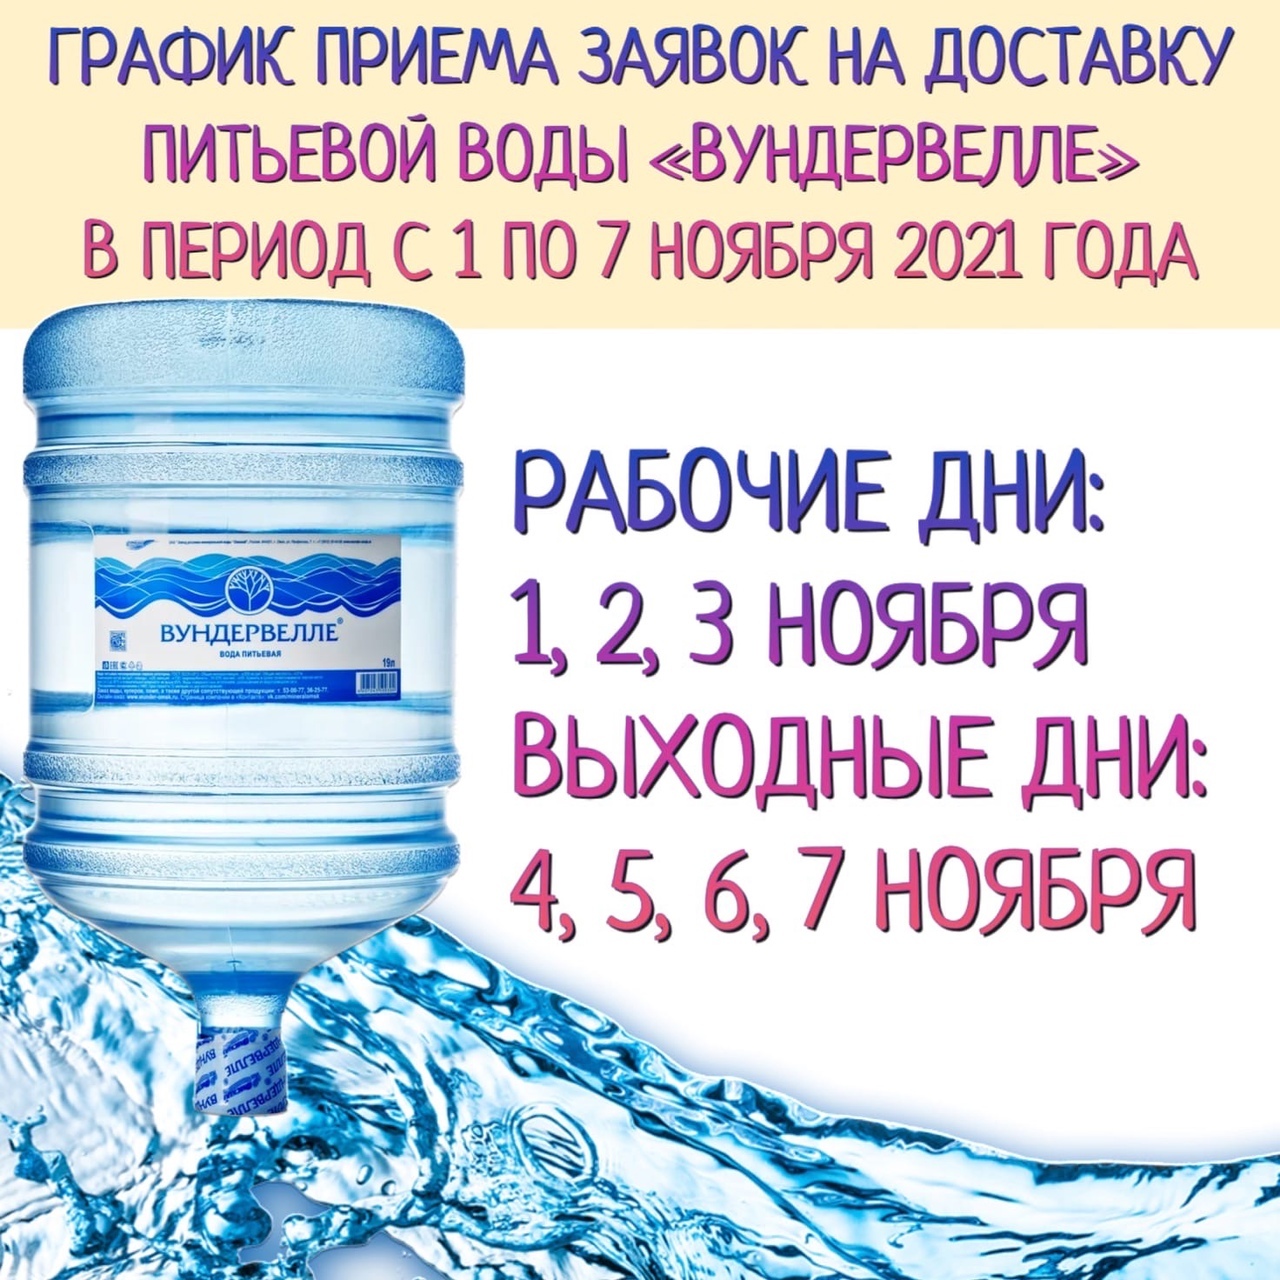 Заказ воды омск